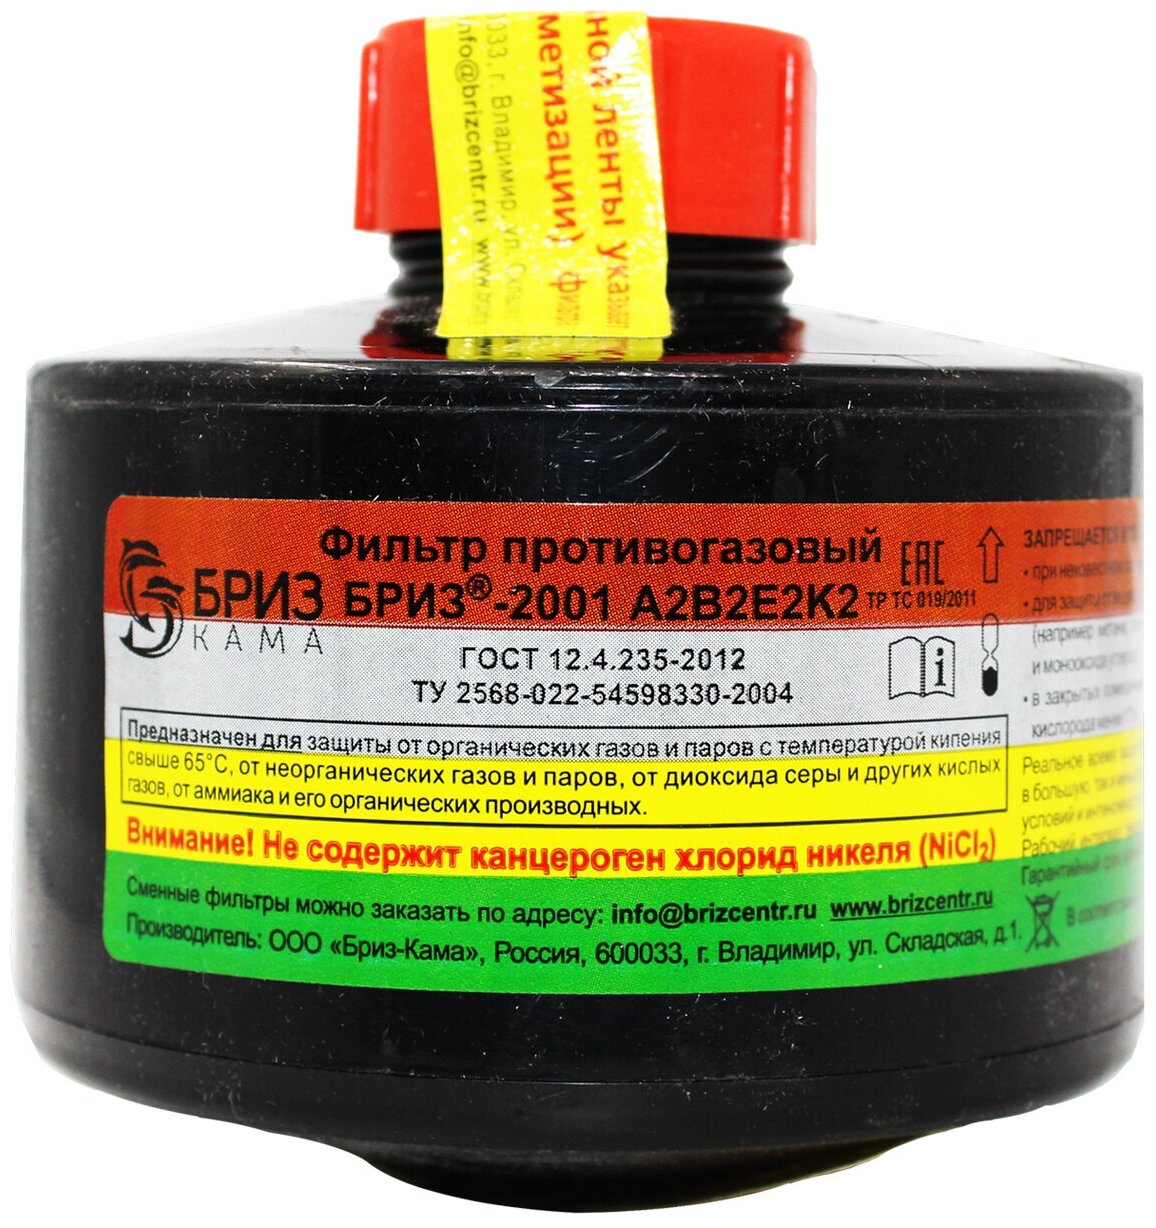 Фильтр противогазовый Бриз-2001 А2В2Е2К2 защита органических неорганических газов и аммиака арт. 1002180